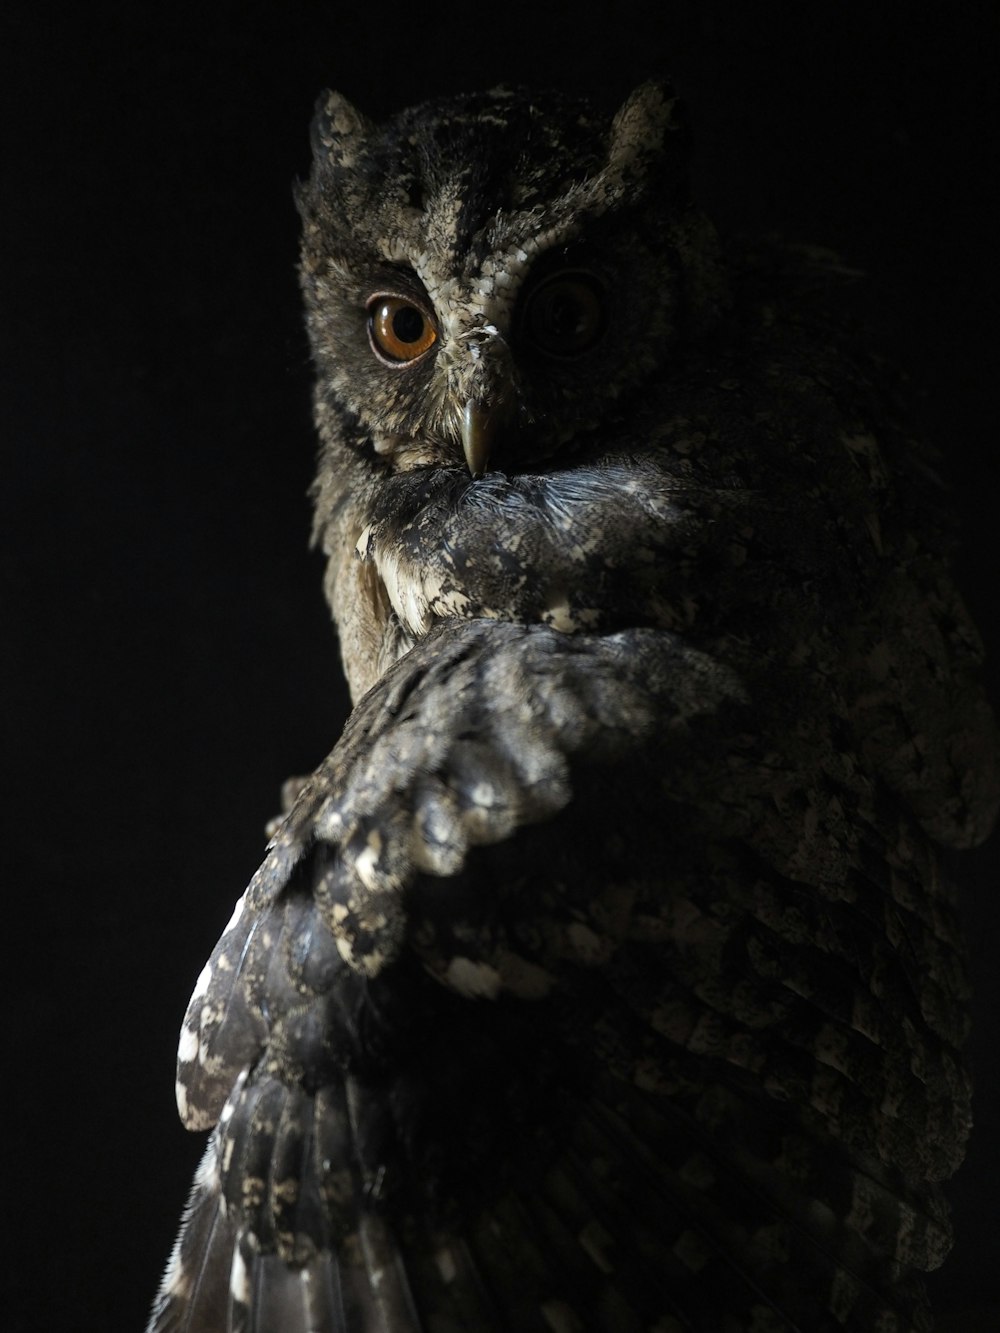 Owl Hd Photo By Agto Nugroho At Agto On Unsplash